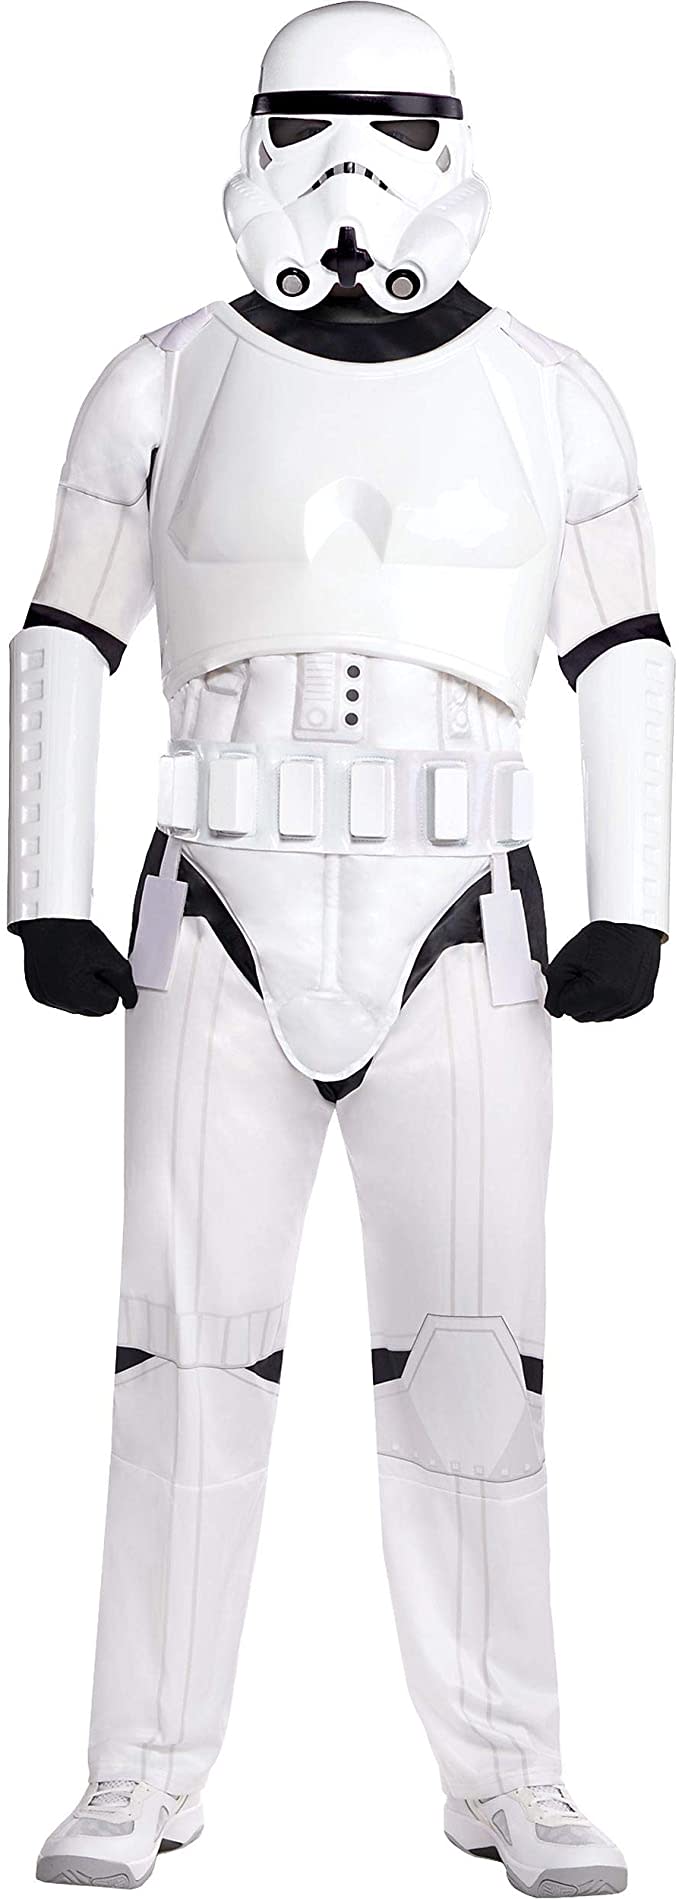 best star wars costumes - Rubie's Star Wars Stormtrooper Deluxe Costume